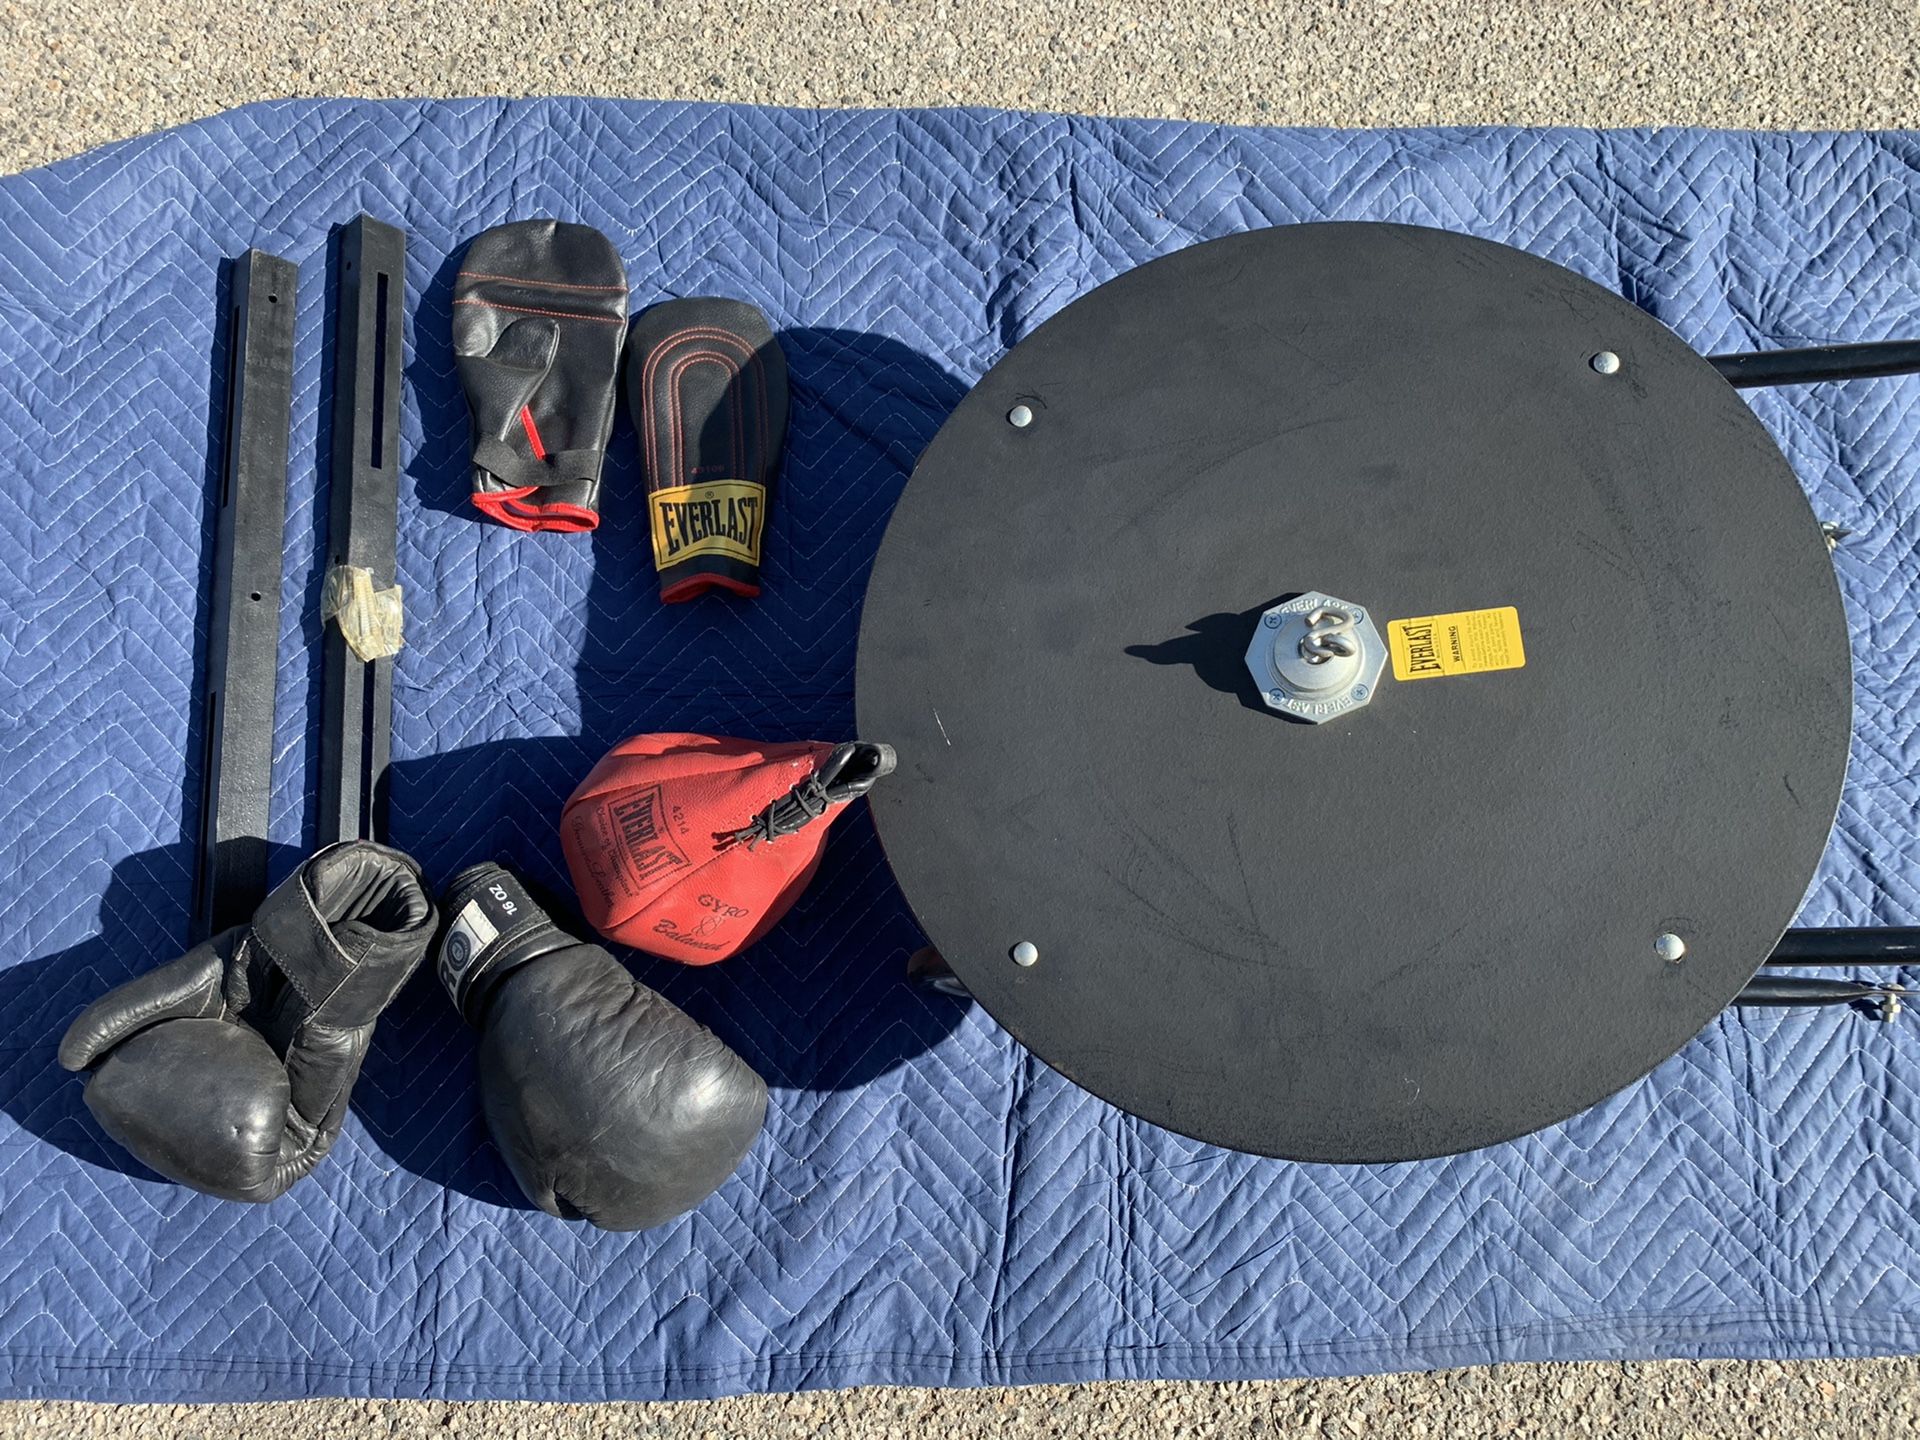 Everlast Speed bag + other exercise equipment